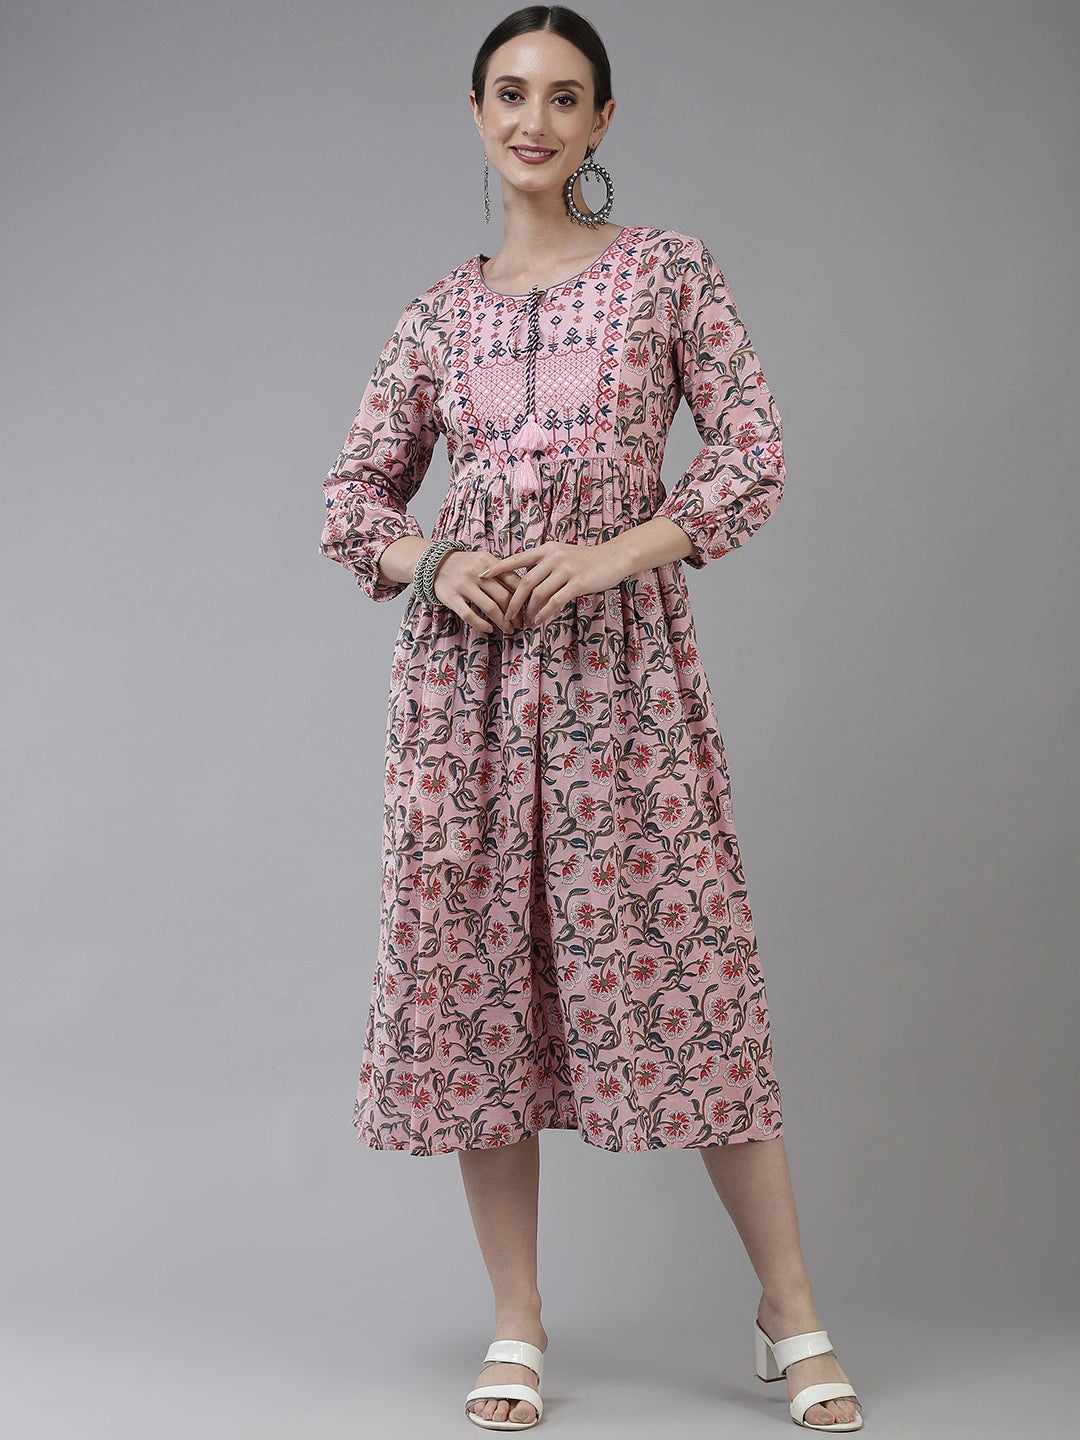 Pink & Grey Printed Ethnic Dress